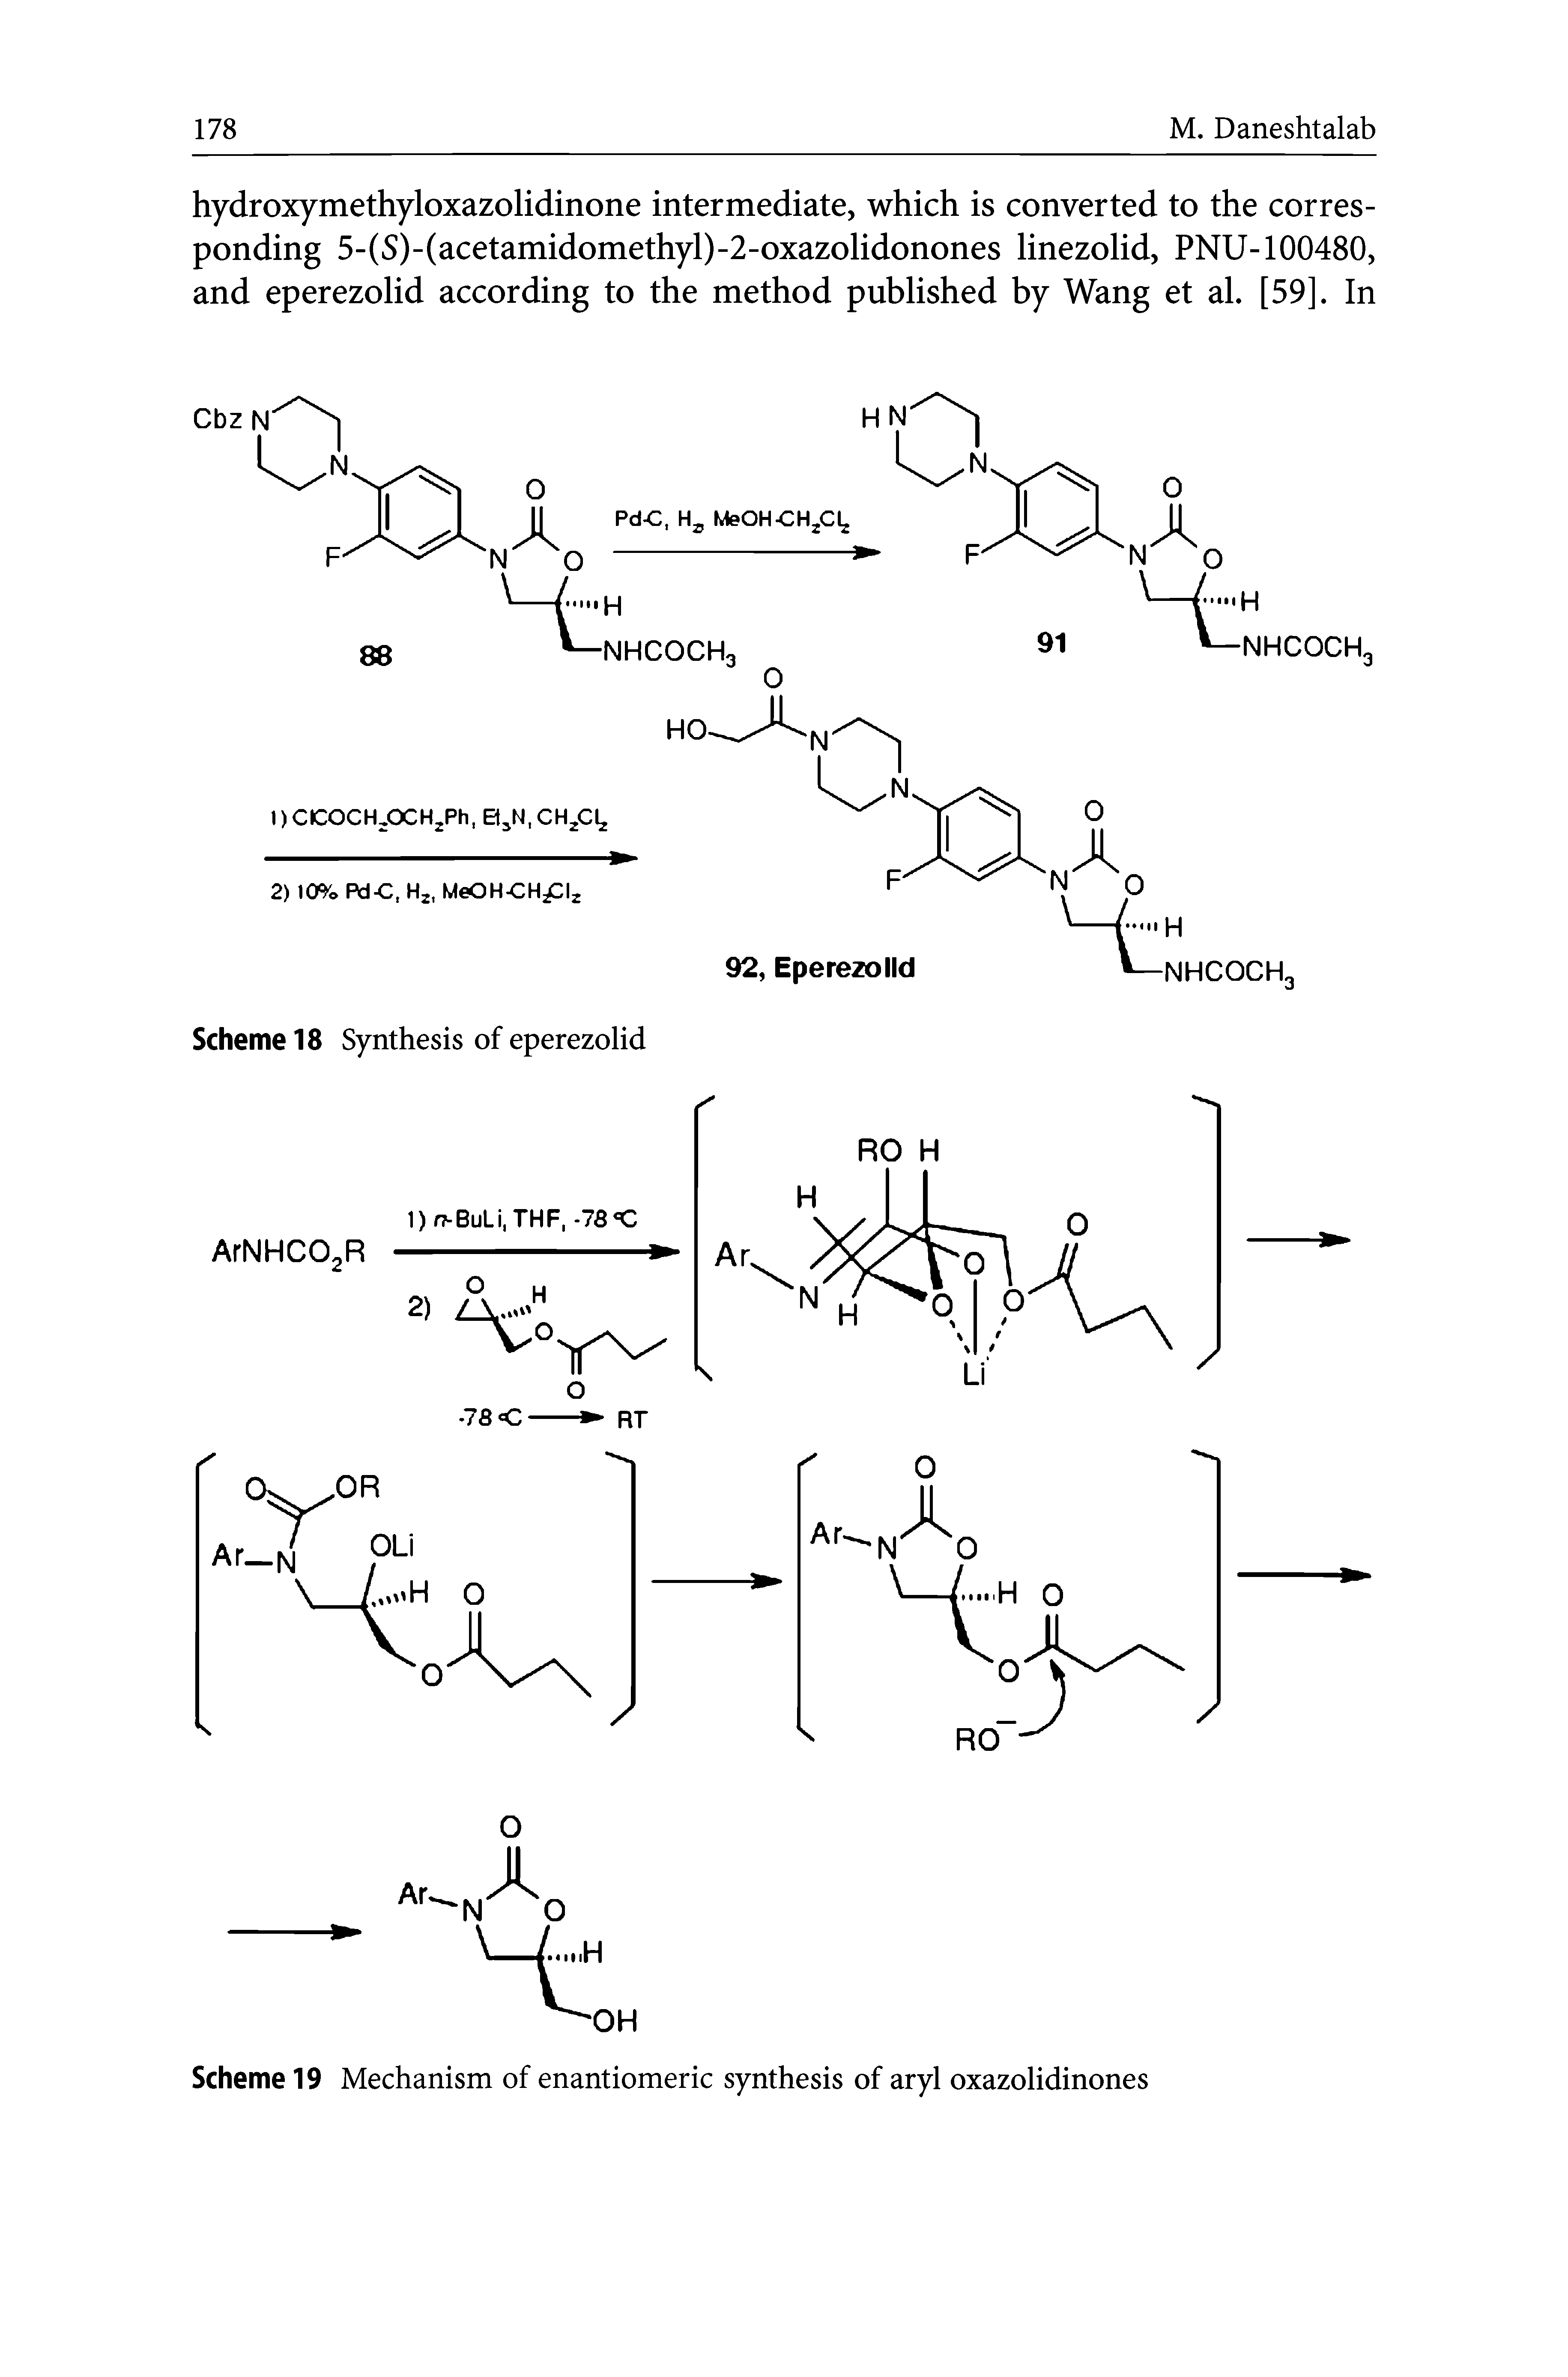 Scheme 19 Mechanism of enantiomeric synthesis of aryl oxazolidinones...